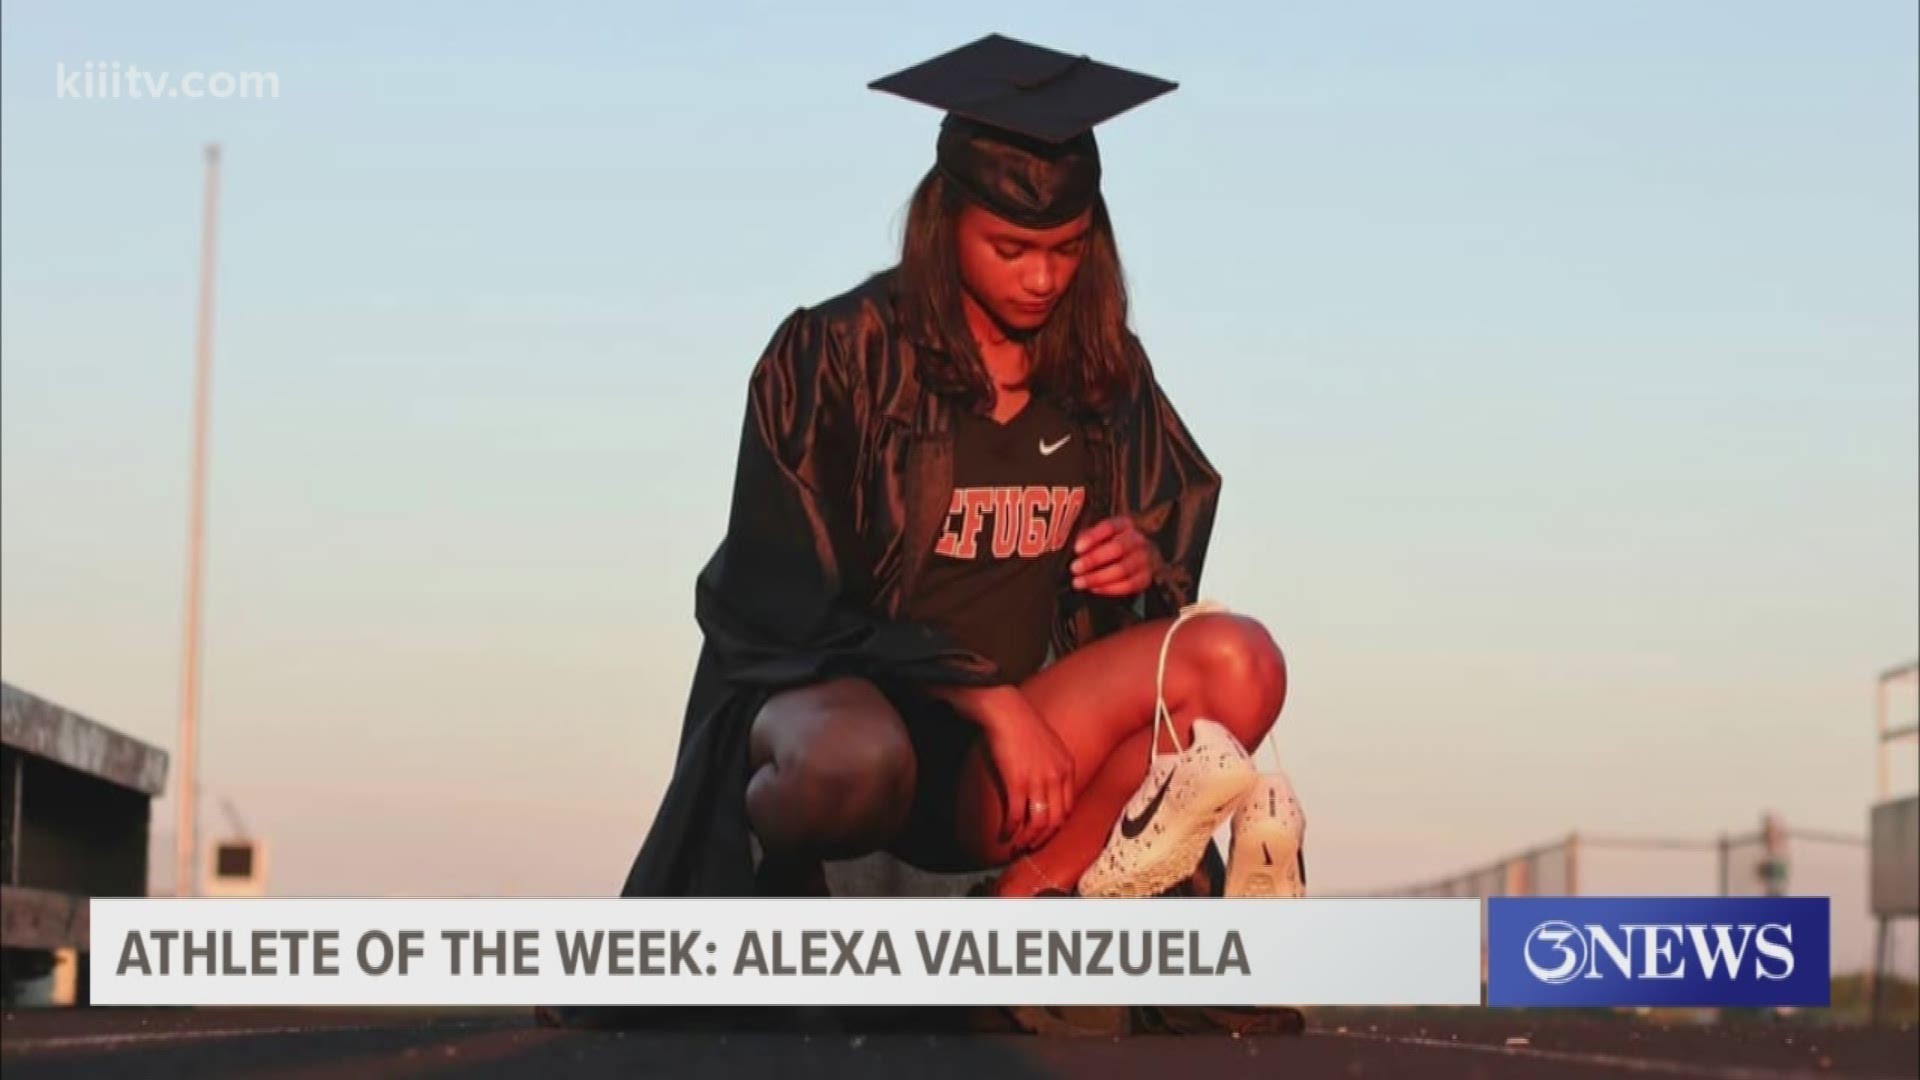 This week's 3News Athlete of the Week is Refugio's Track & Field Star Alexa Valenzuela.